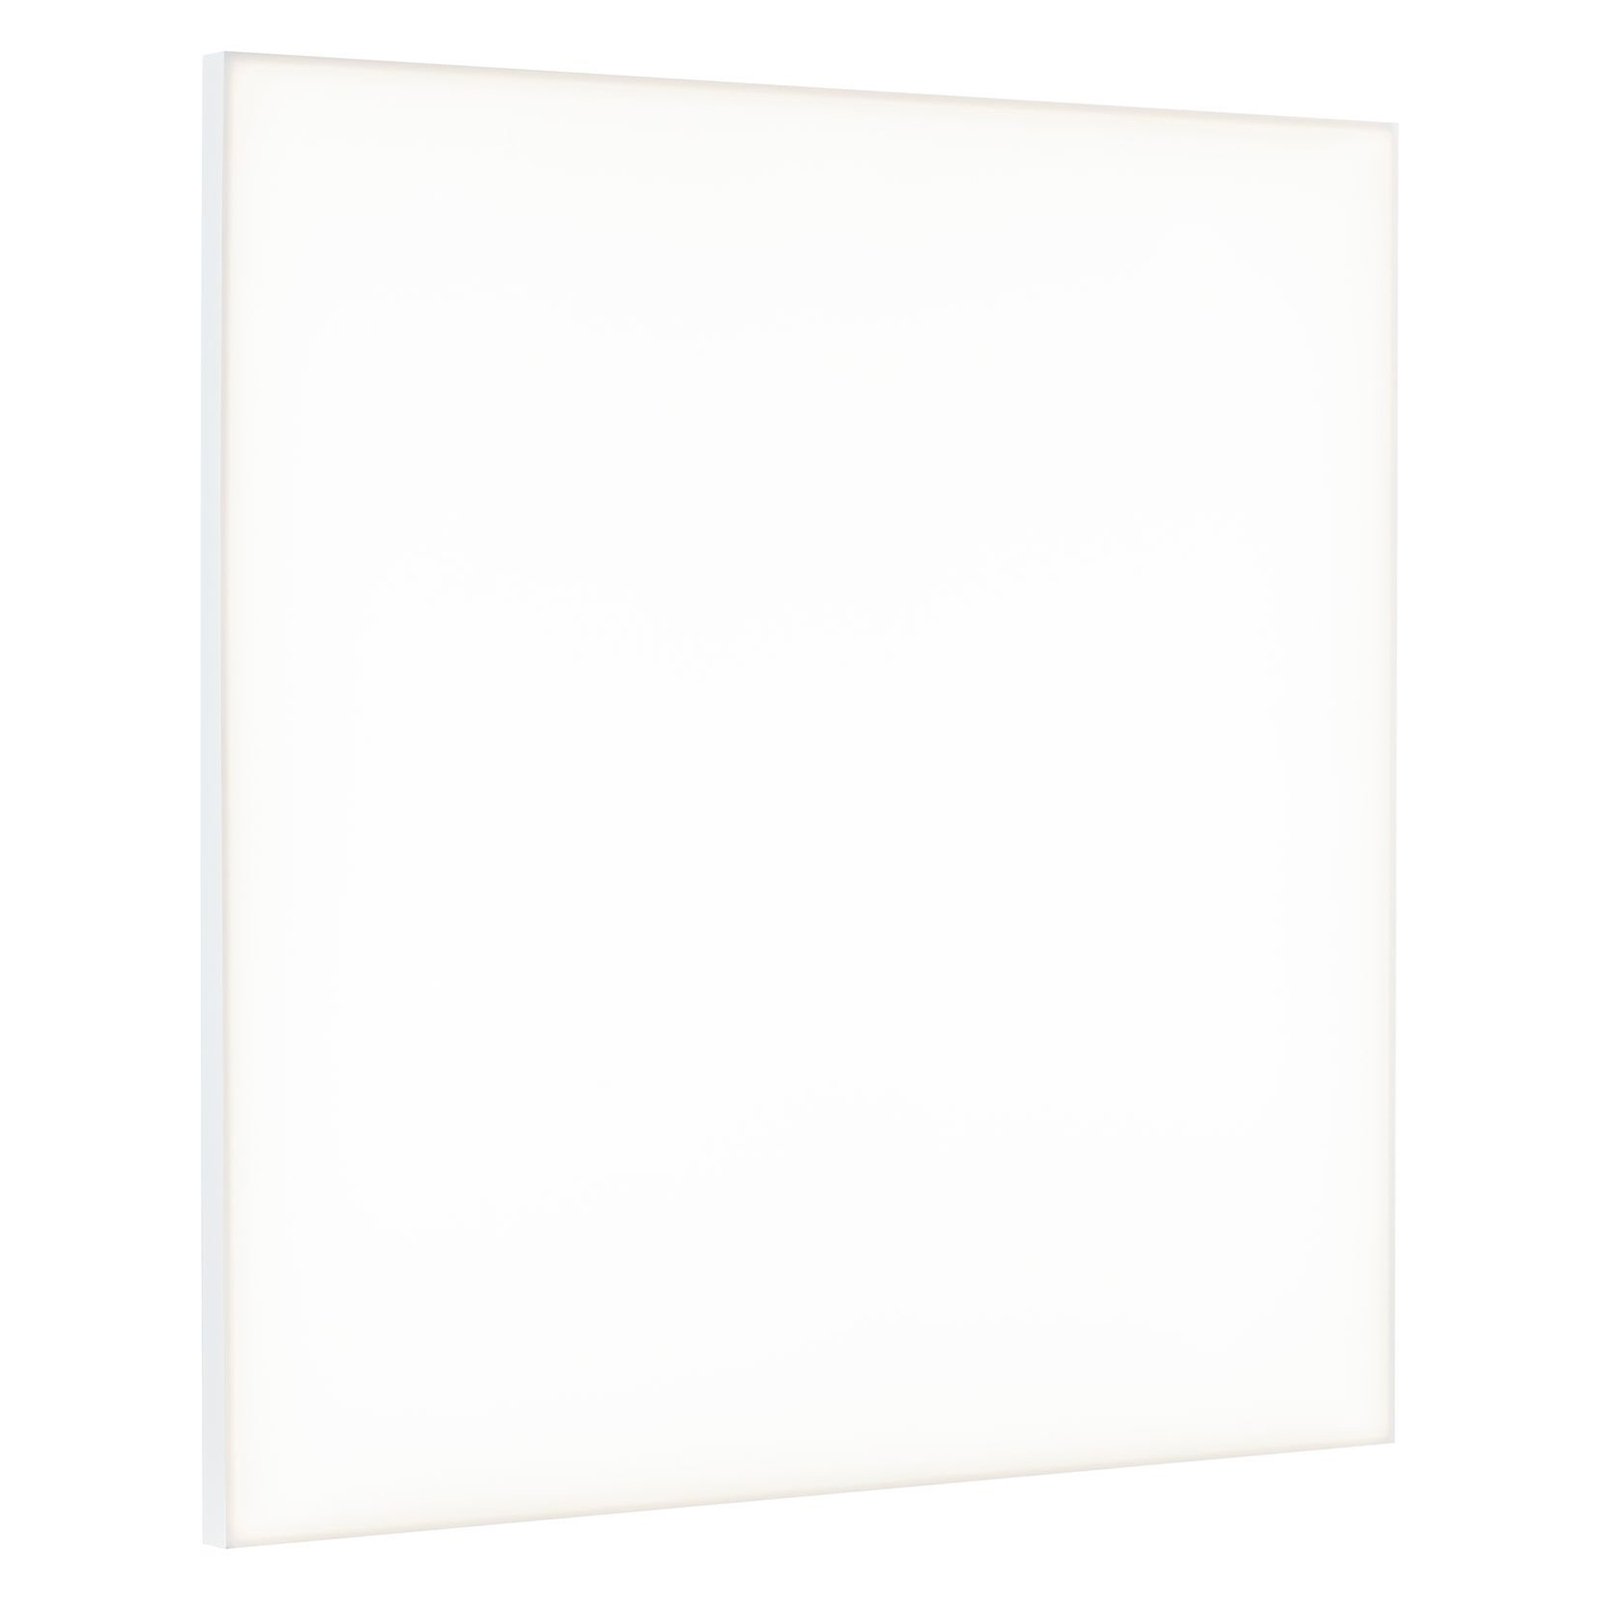 Paulmann Velora panel LED 3-step-dim, 59,5x59,5 cm